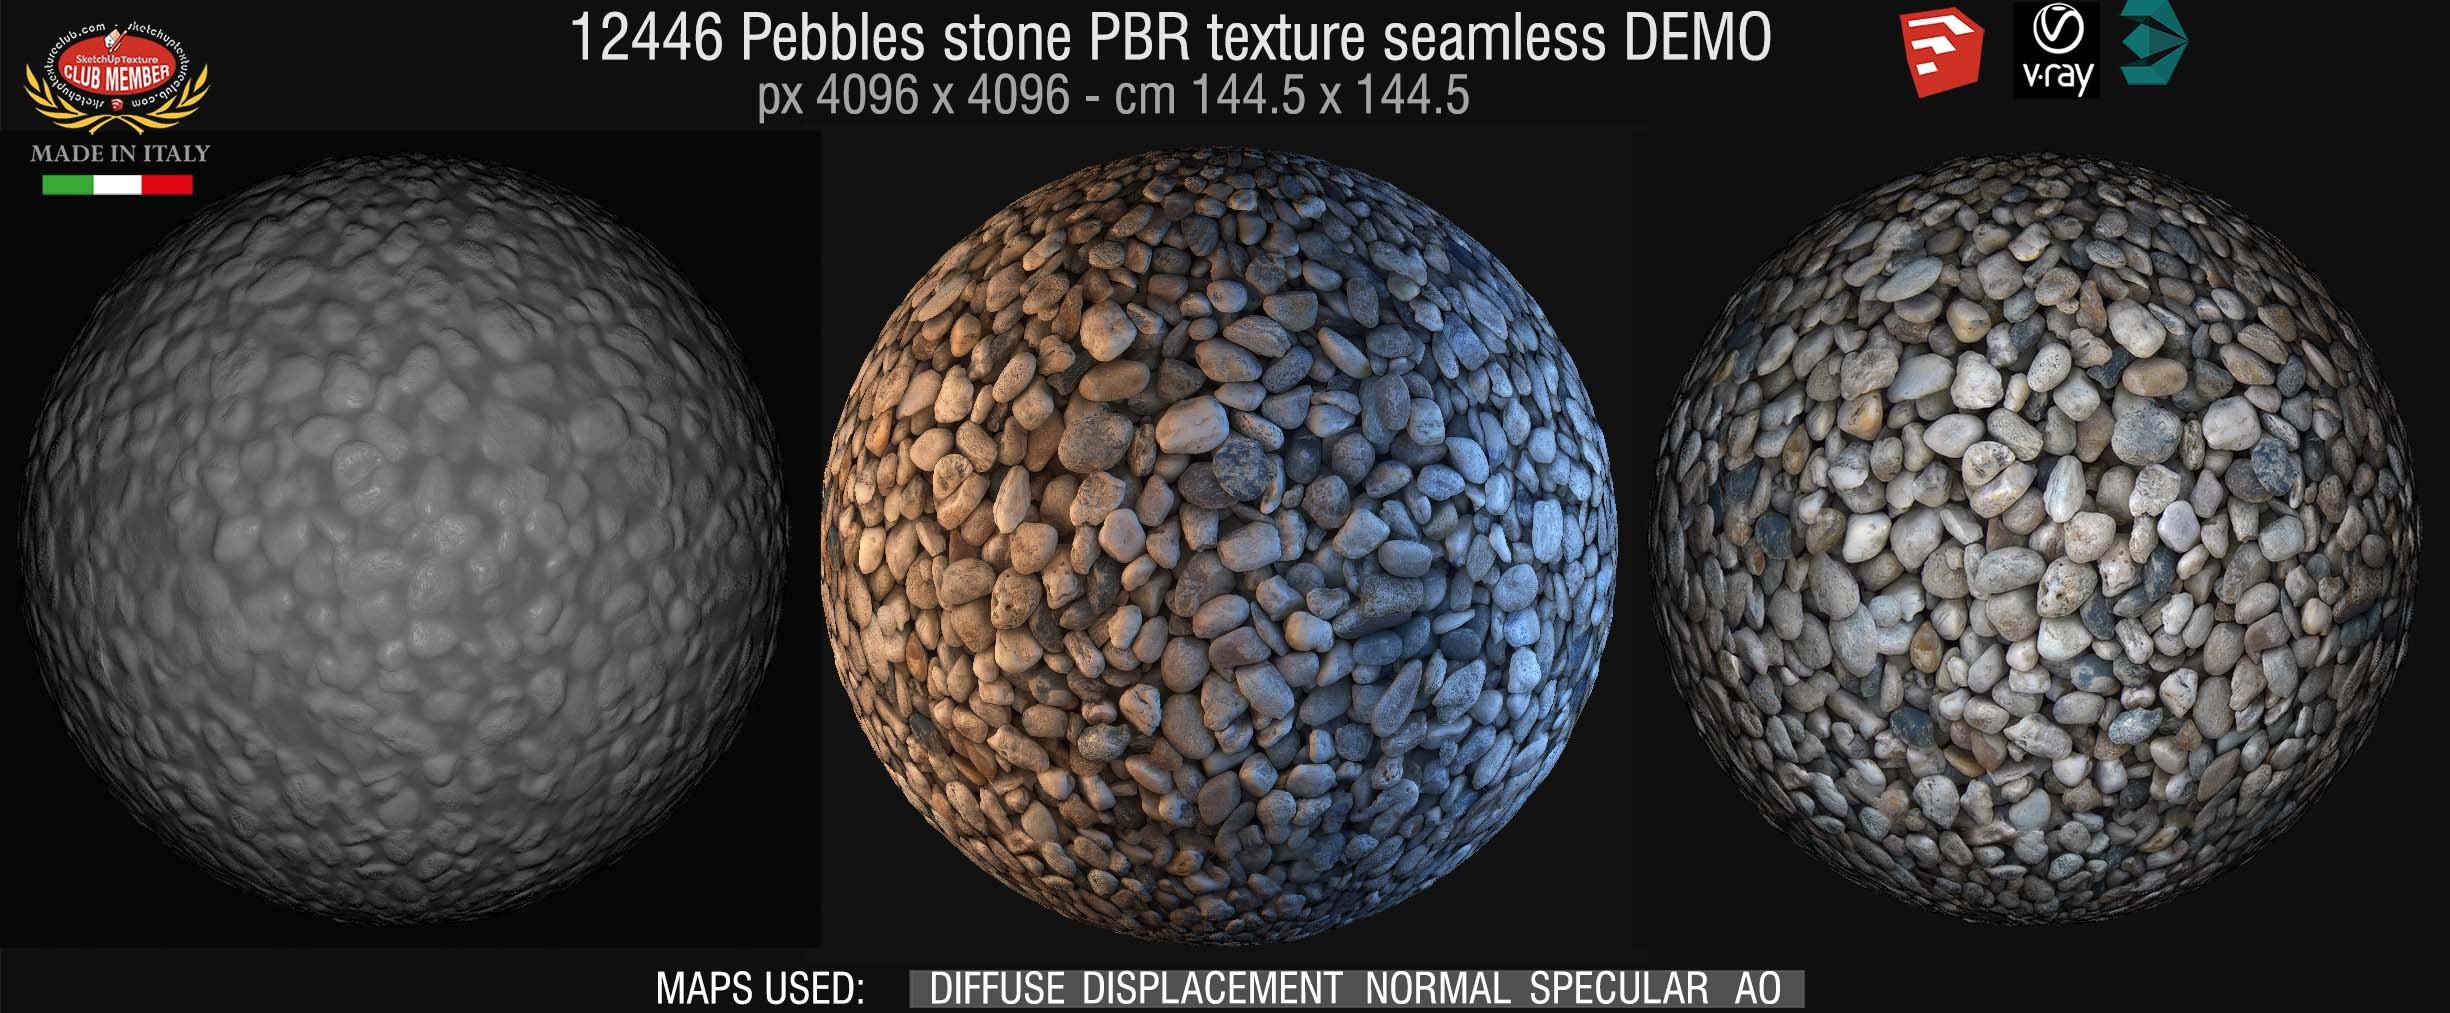 12446 Pebbles stone PBR texture seamless DEMO